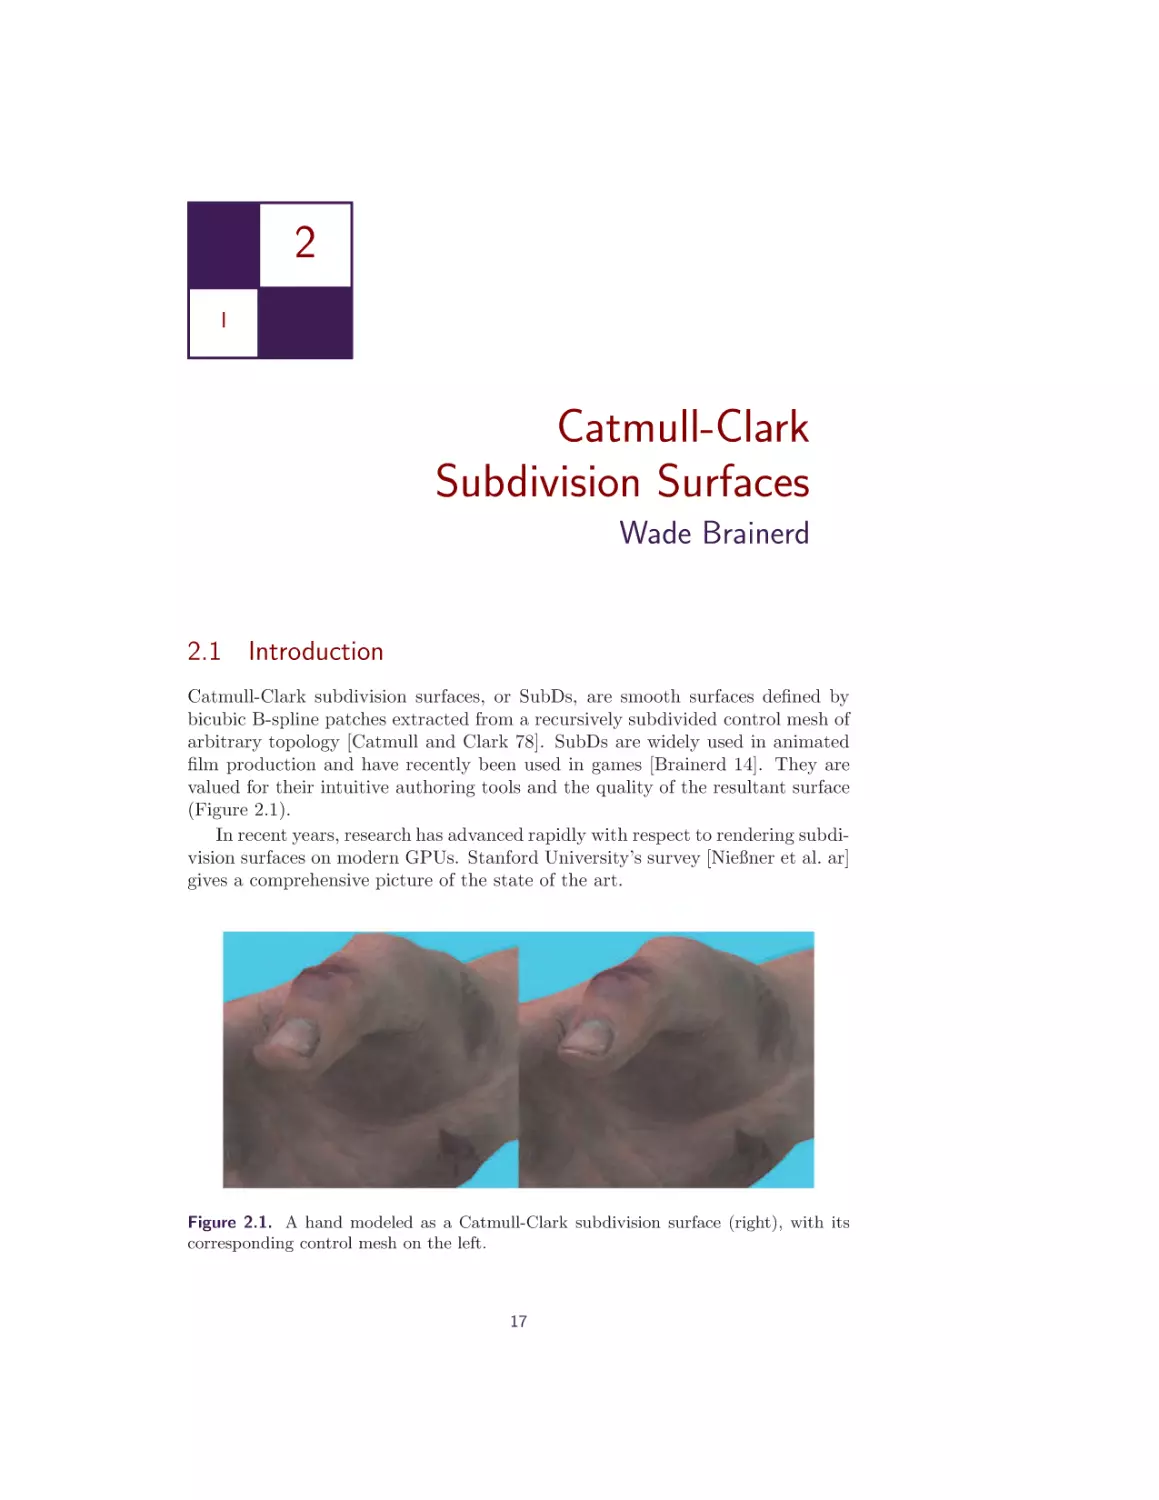 2. Catmull-Clark Subdivision Surfaces